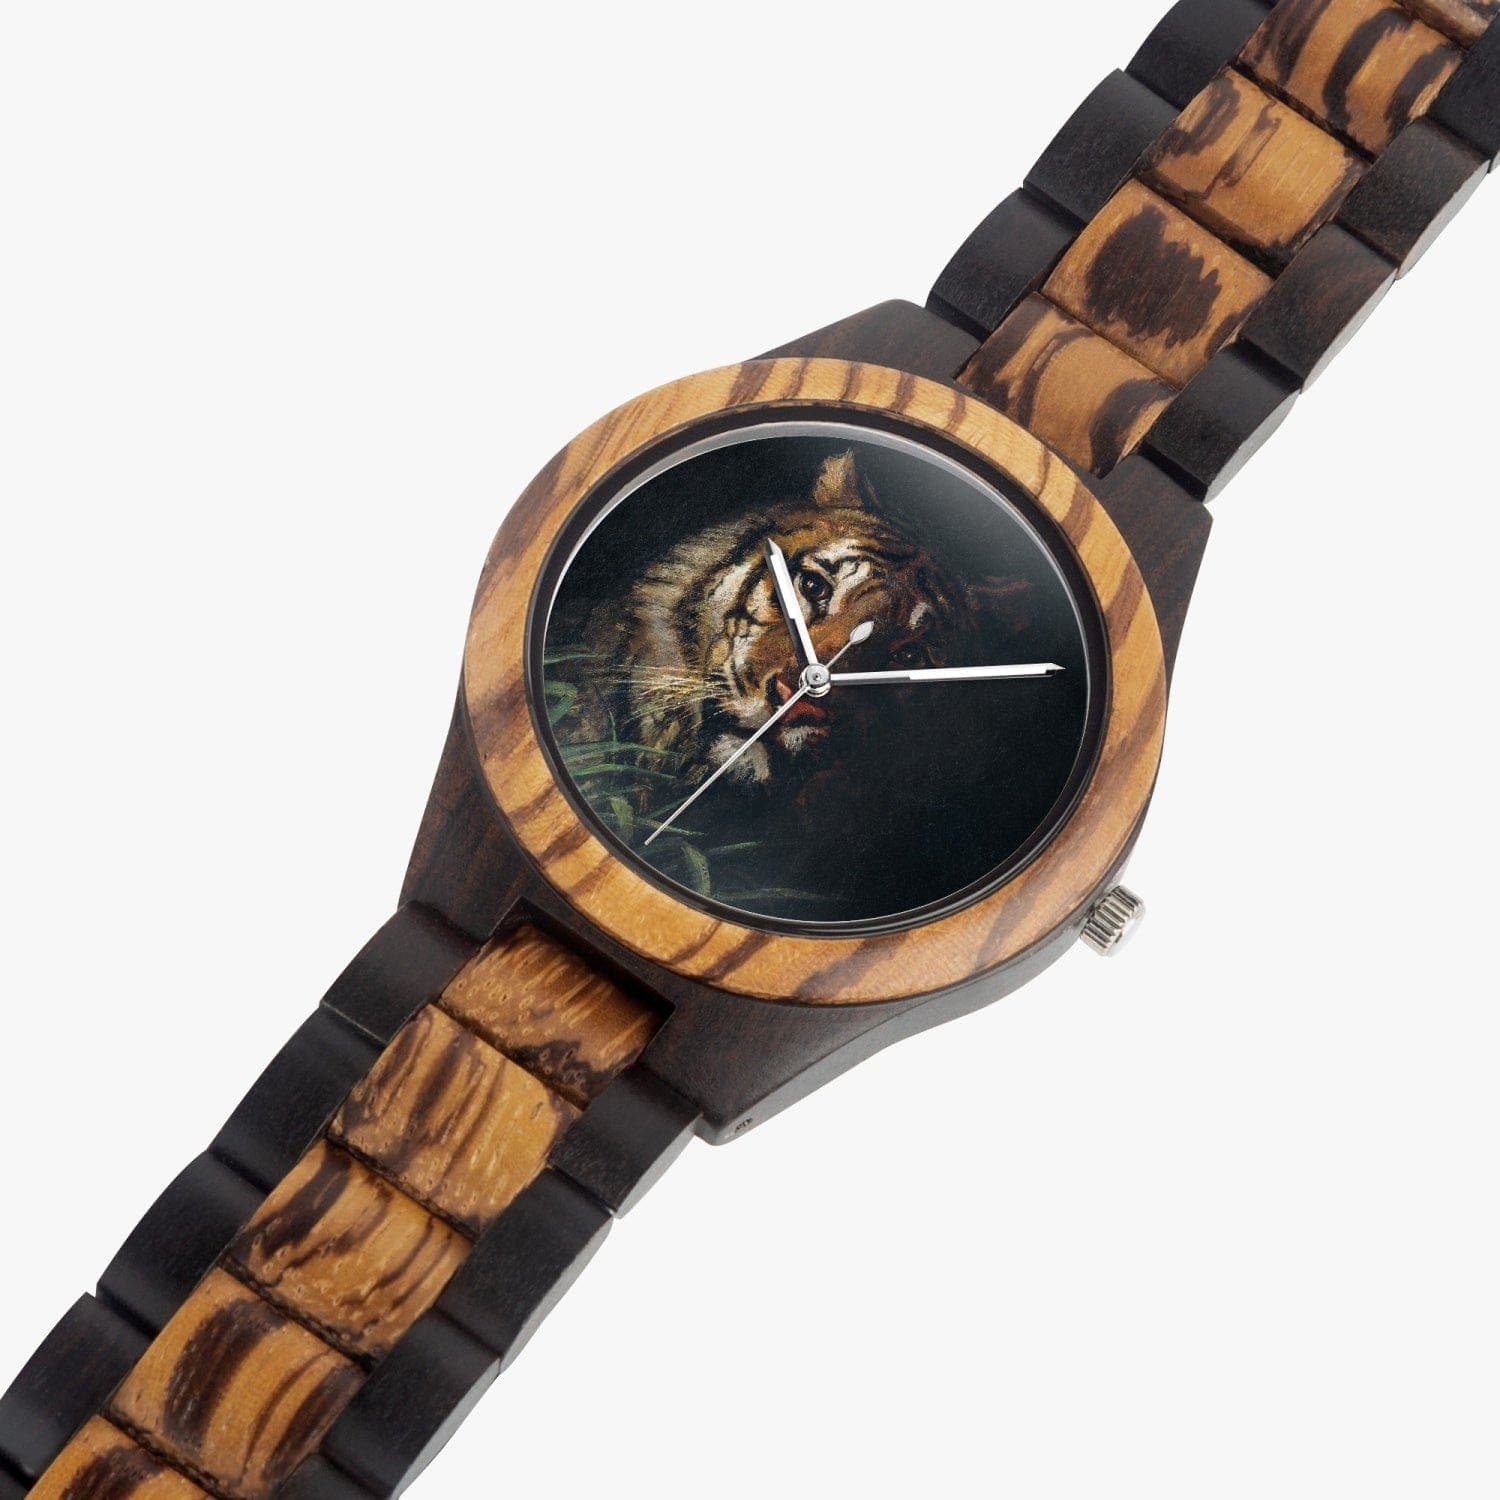 Tigers Head,  Ebony Wooden Watch, by Sensus Studio Design